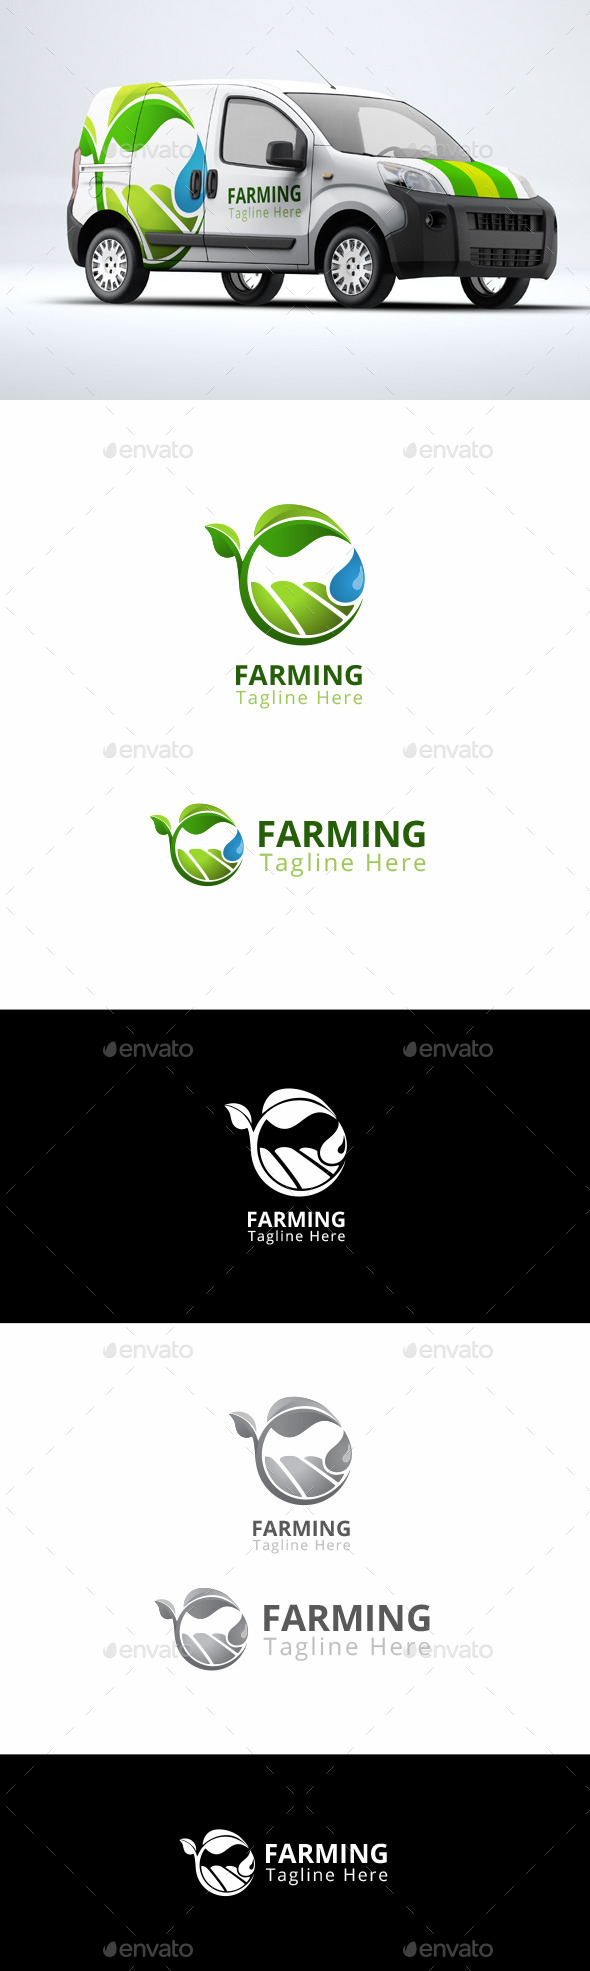 Farming - Agriculture Logo Template